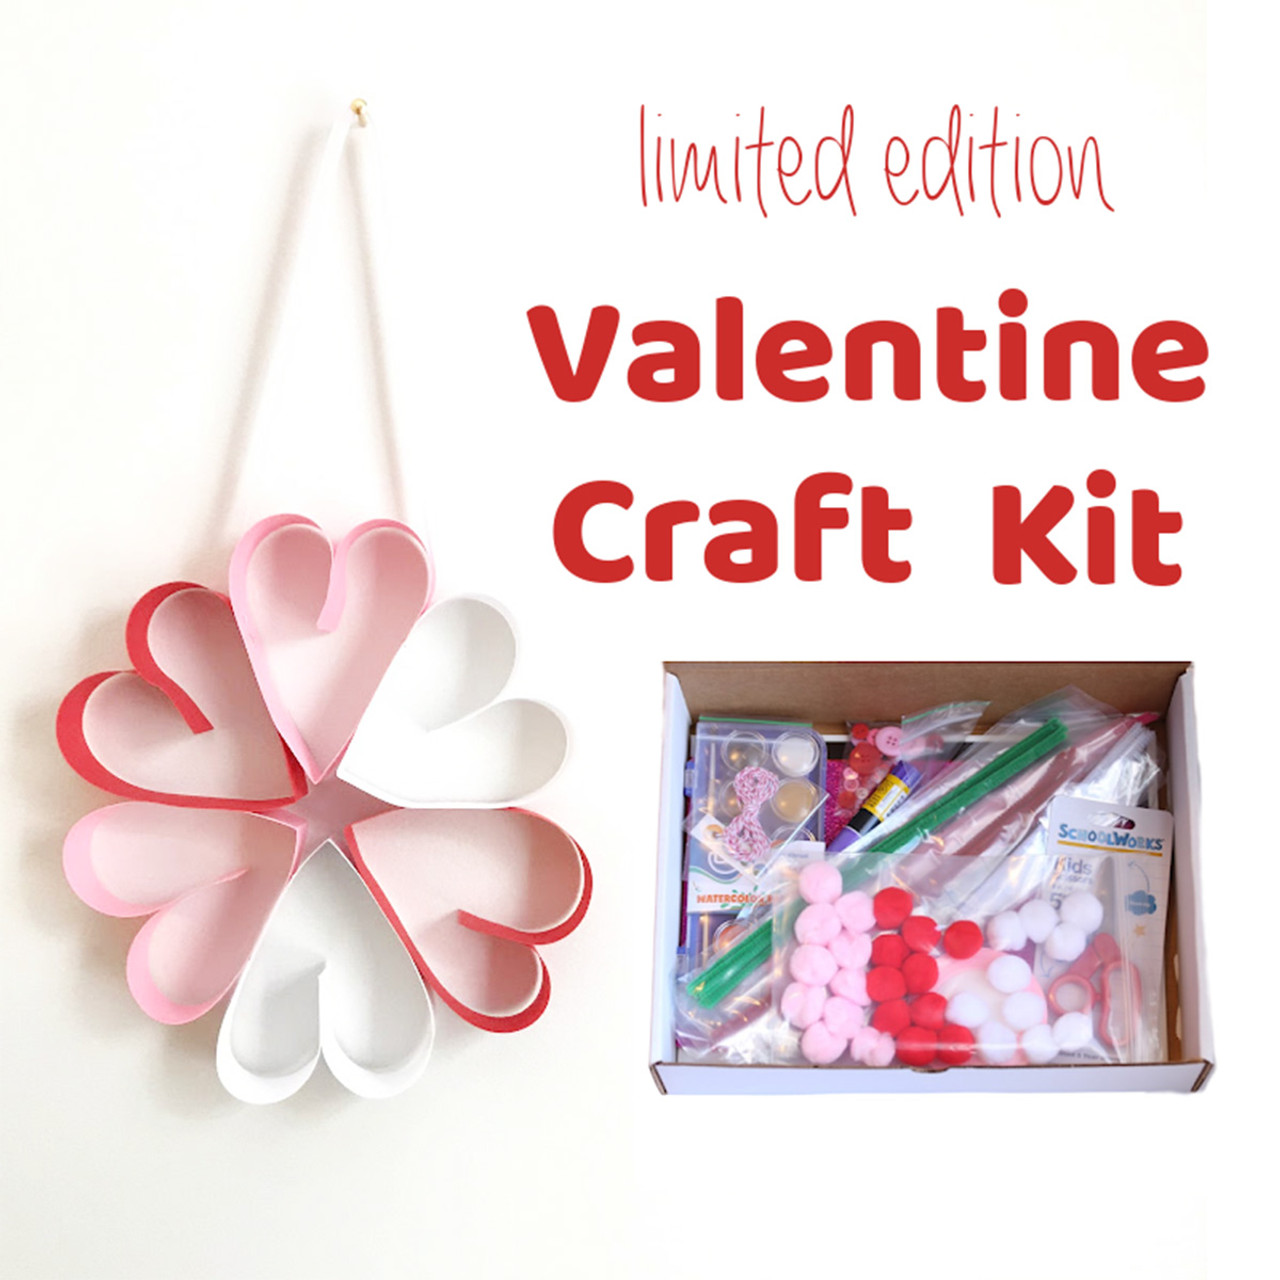 Valentine's Craft Kit